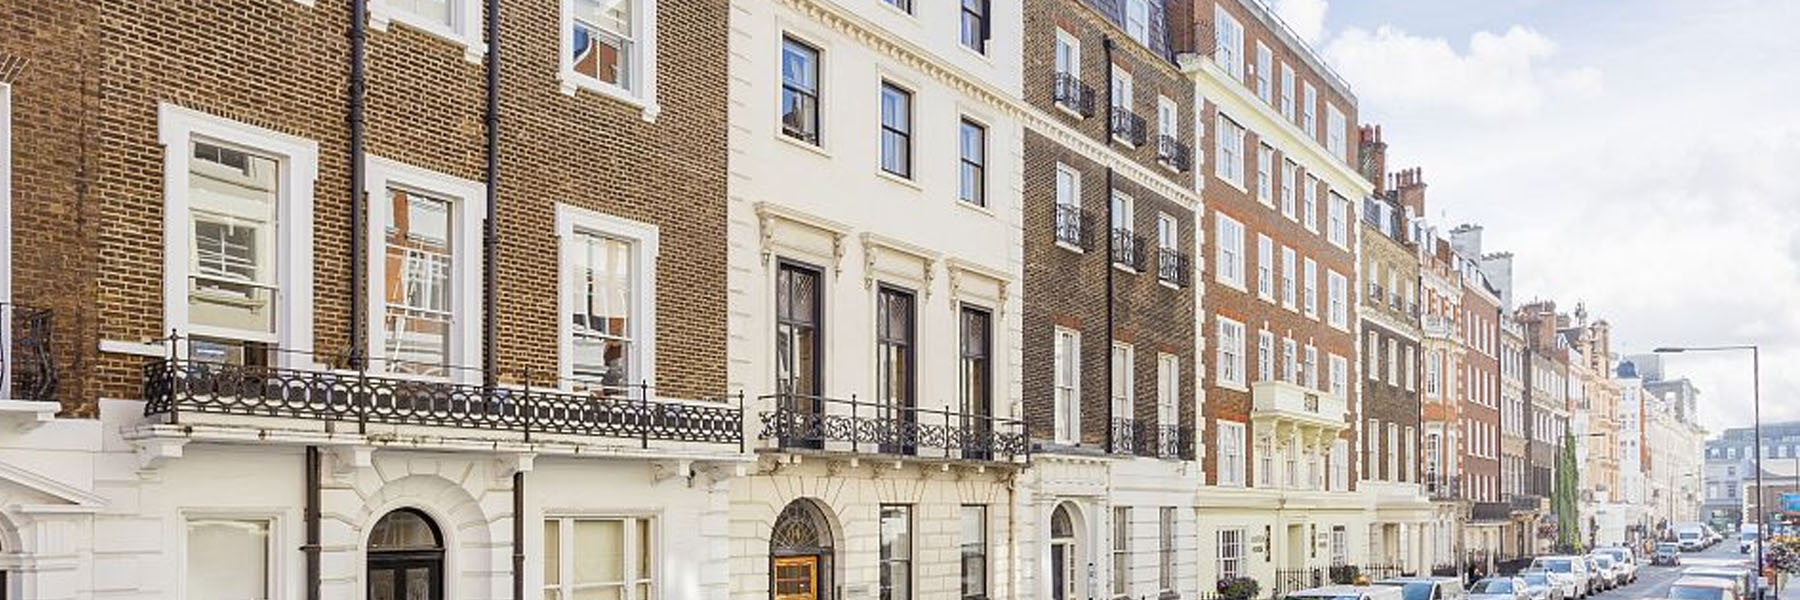 Wimpole Street | Martin Property Group